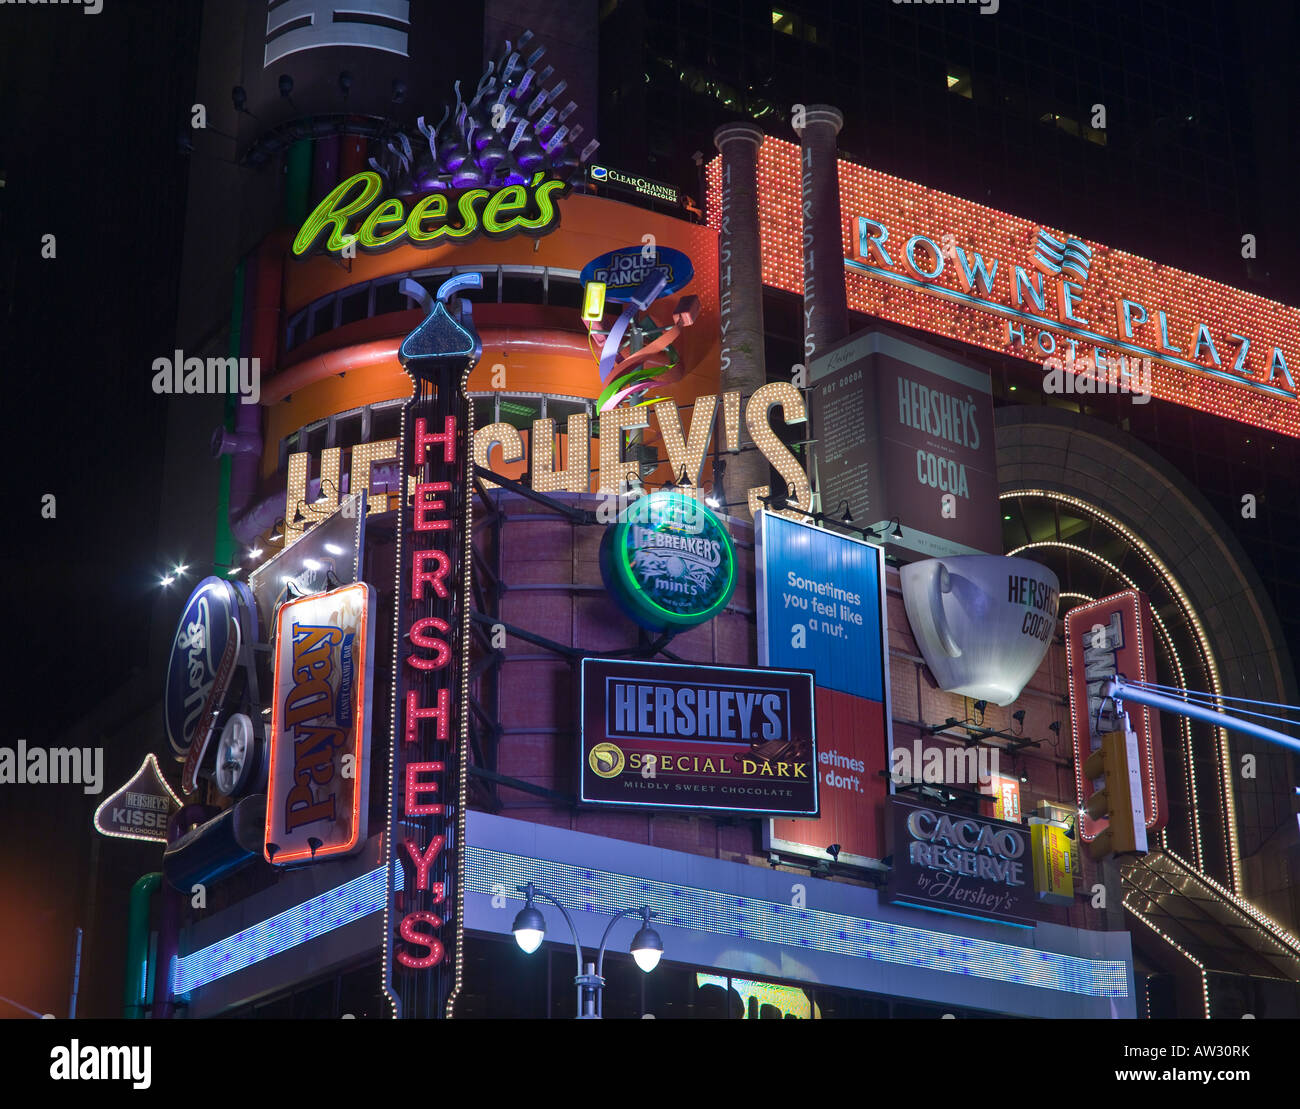 Hersheys advertisements 48th Street and Broadway, near Times Square, Manhattan New York USA at night Stock Photo